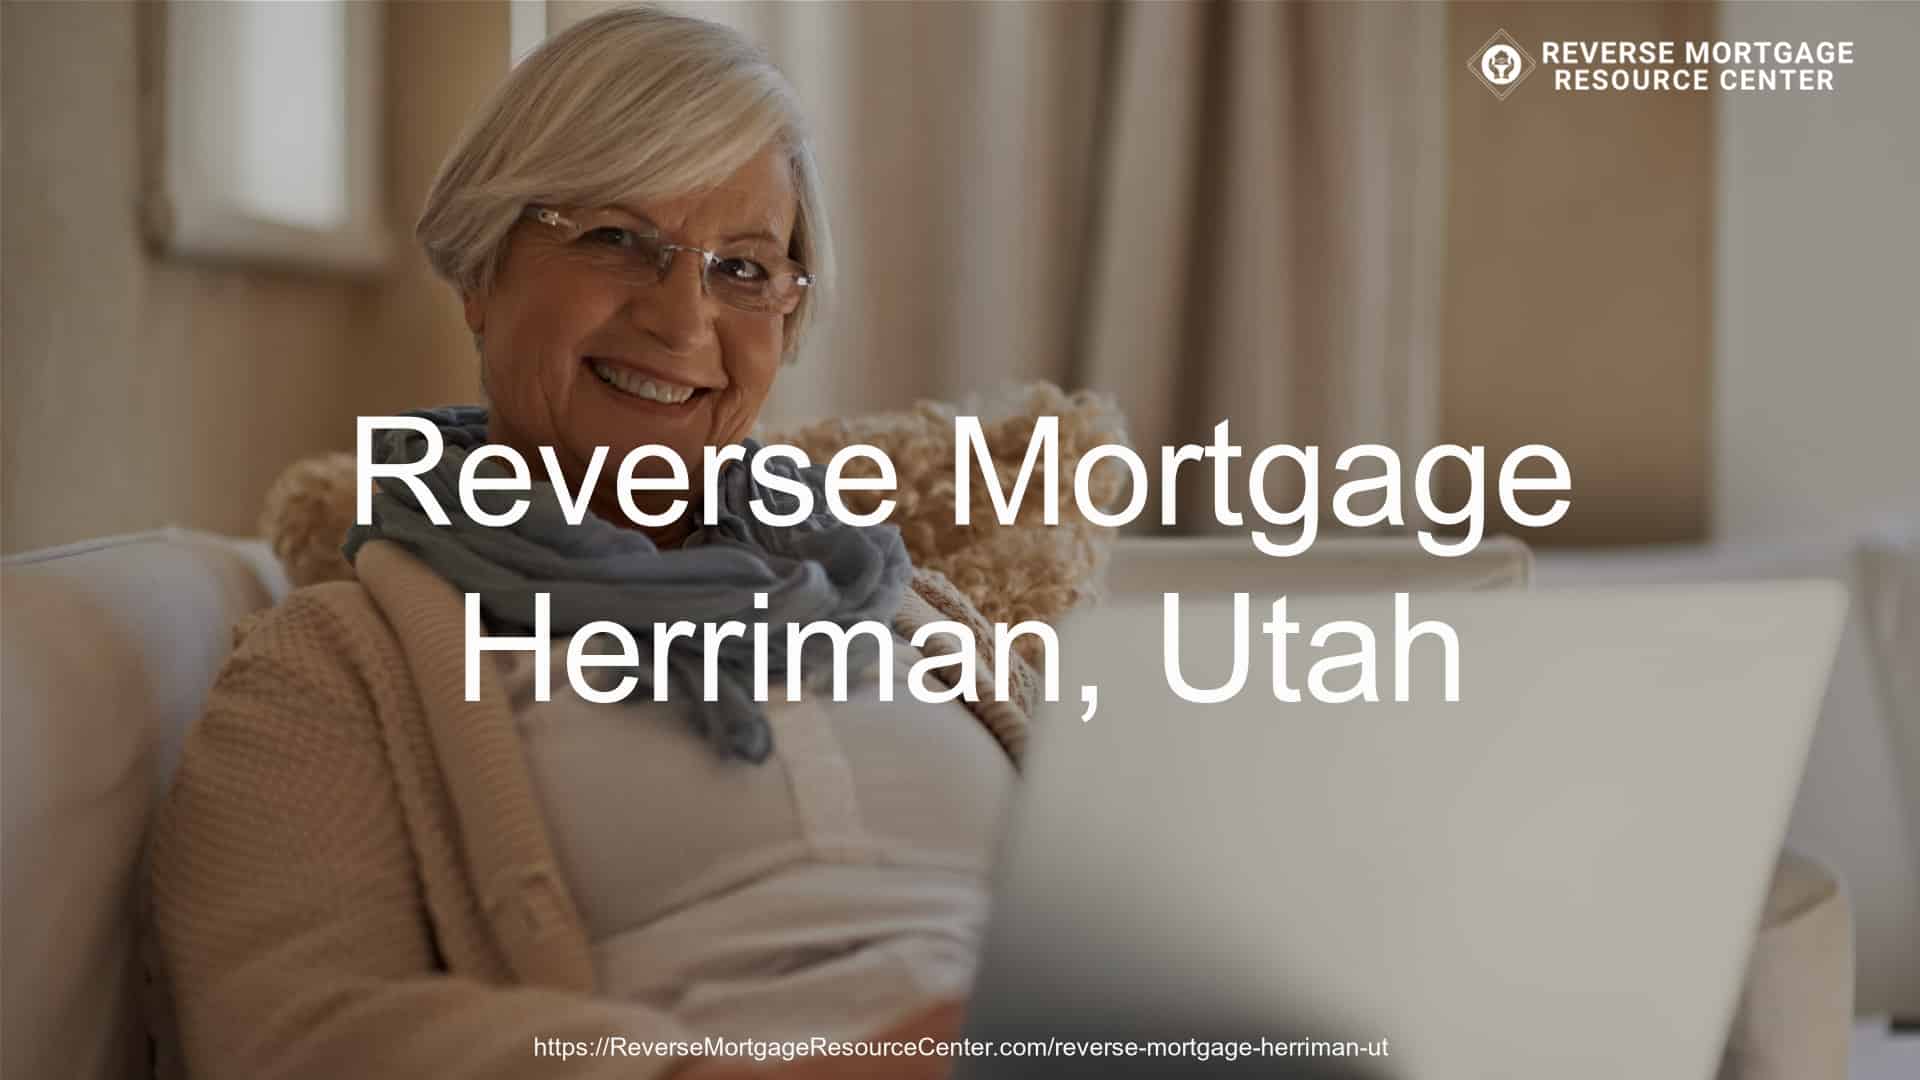 Reverse Mortgage Loans in Herriman Utah